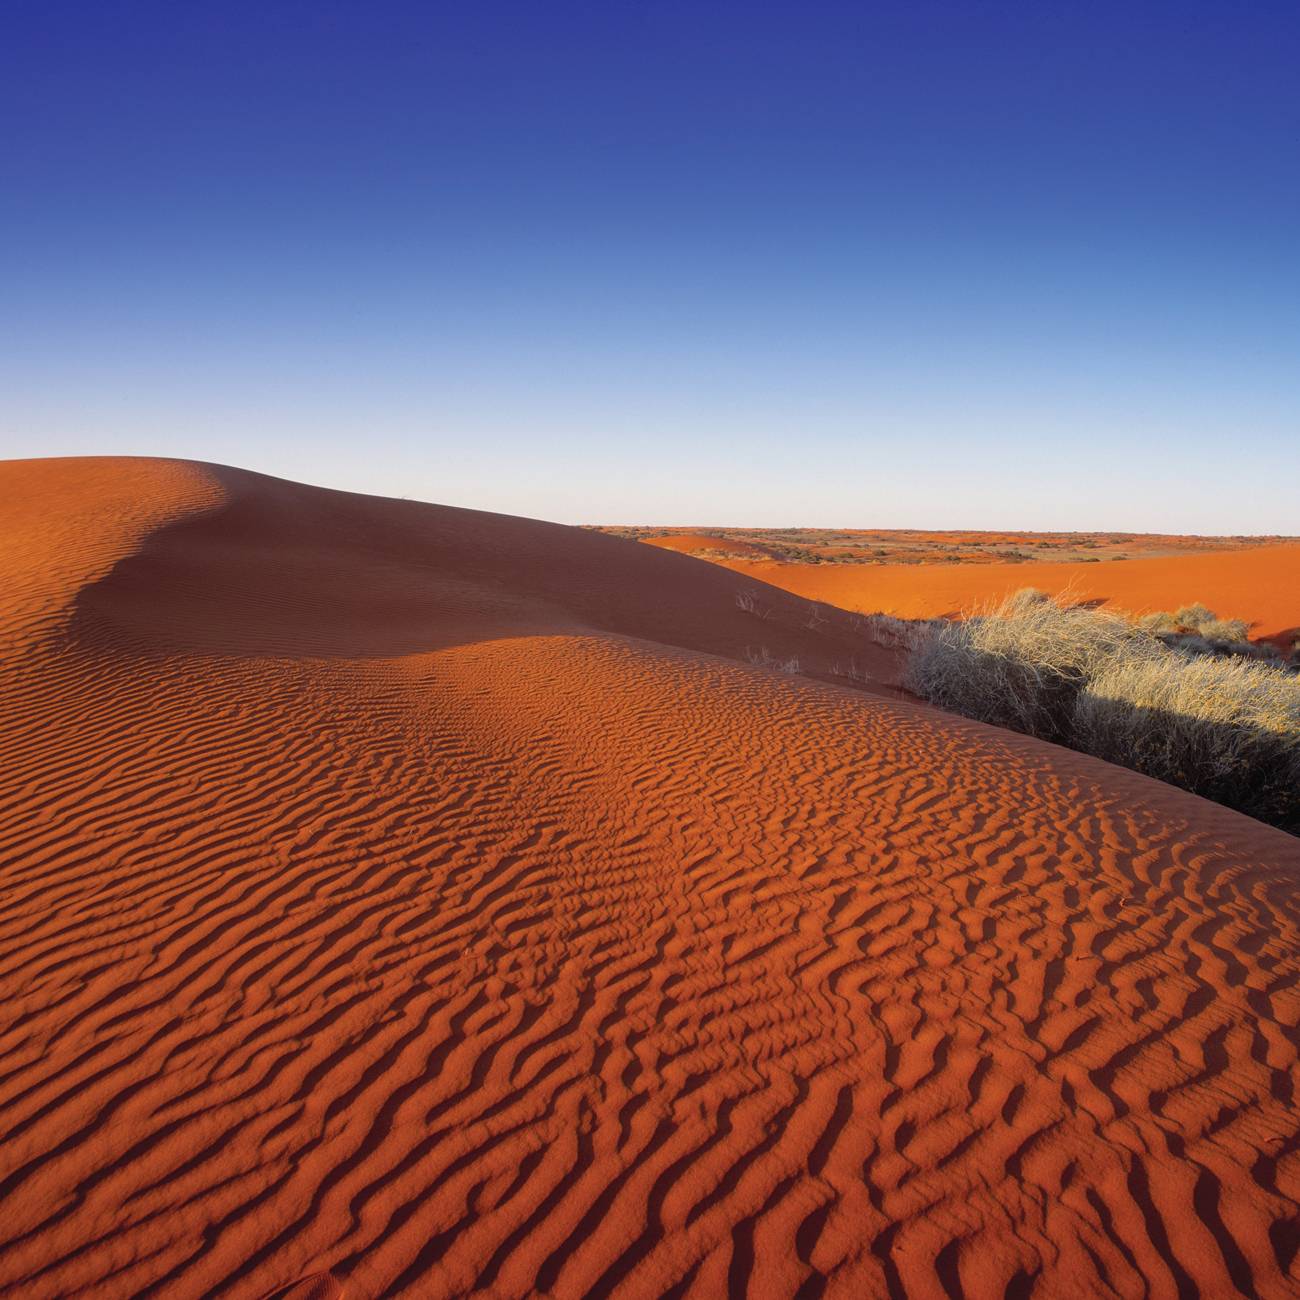 Пустыня гибсона австралия. Пустыни и полупустыни Австралии. Пустыня Гибсона в Австралии. Пустыня Симпсона в Австралии.